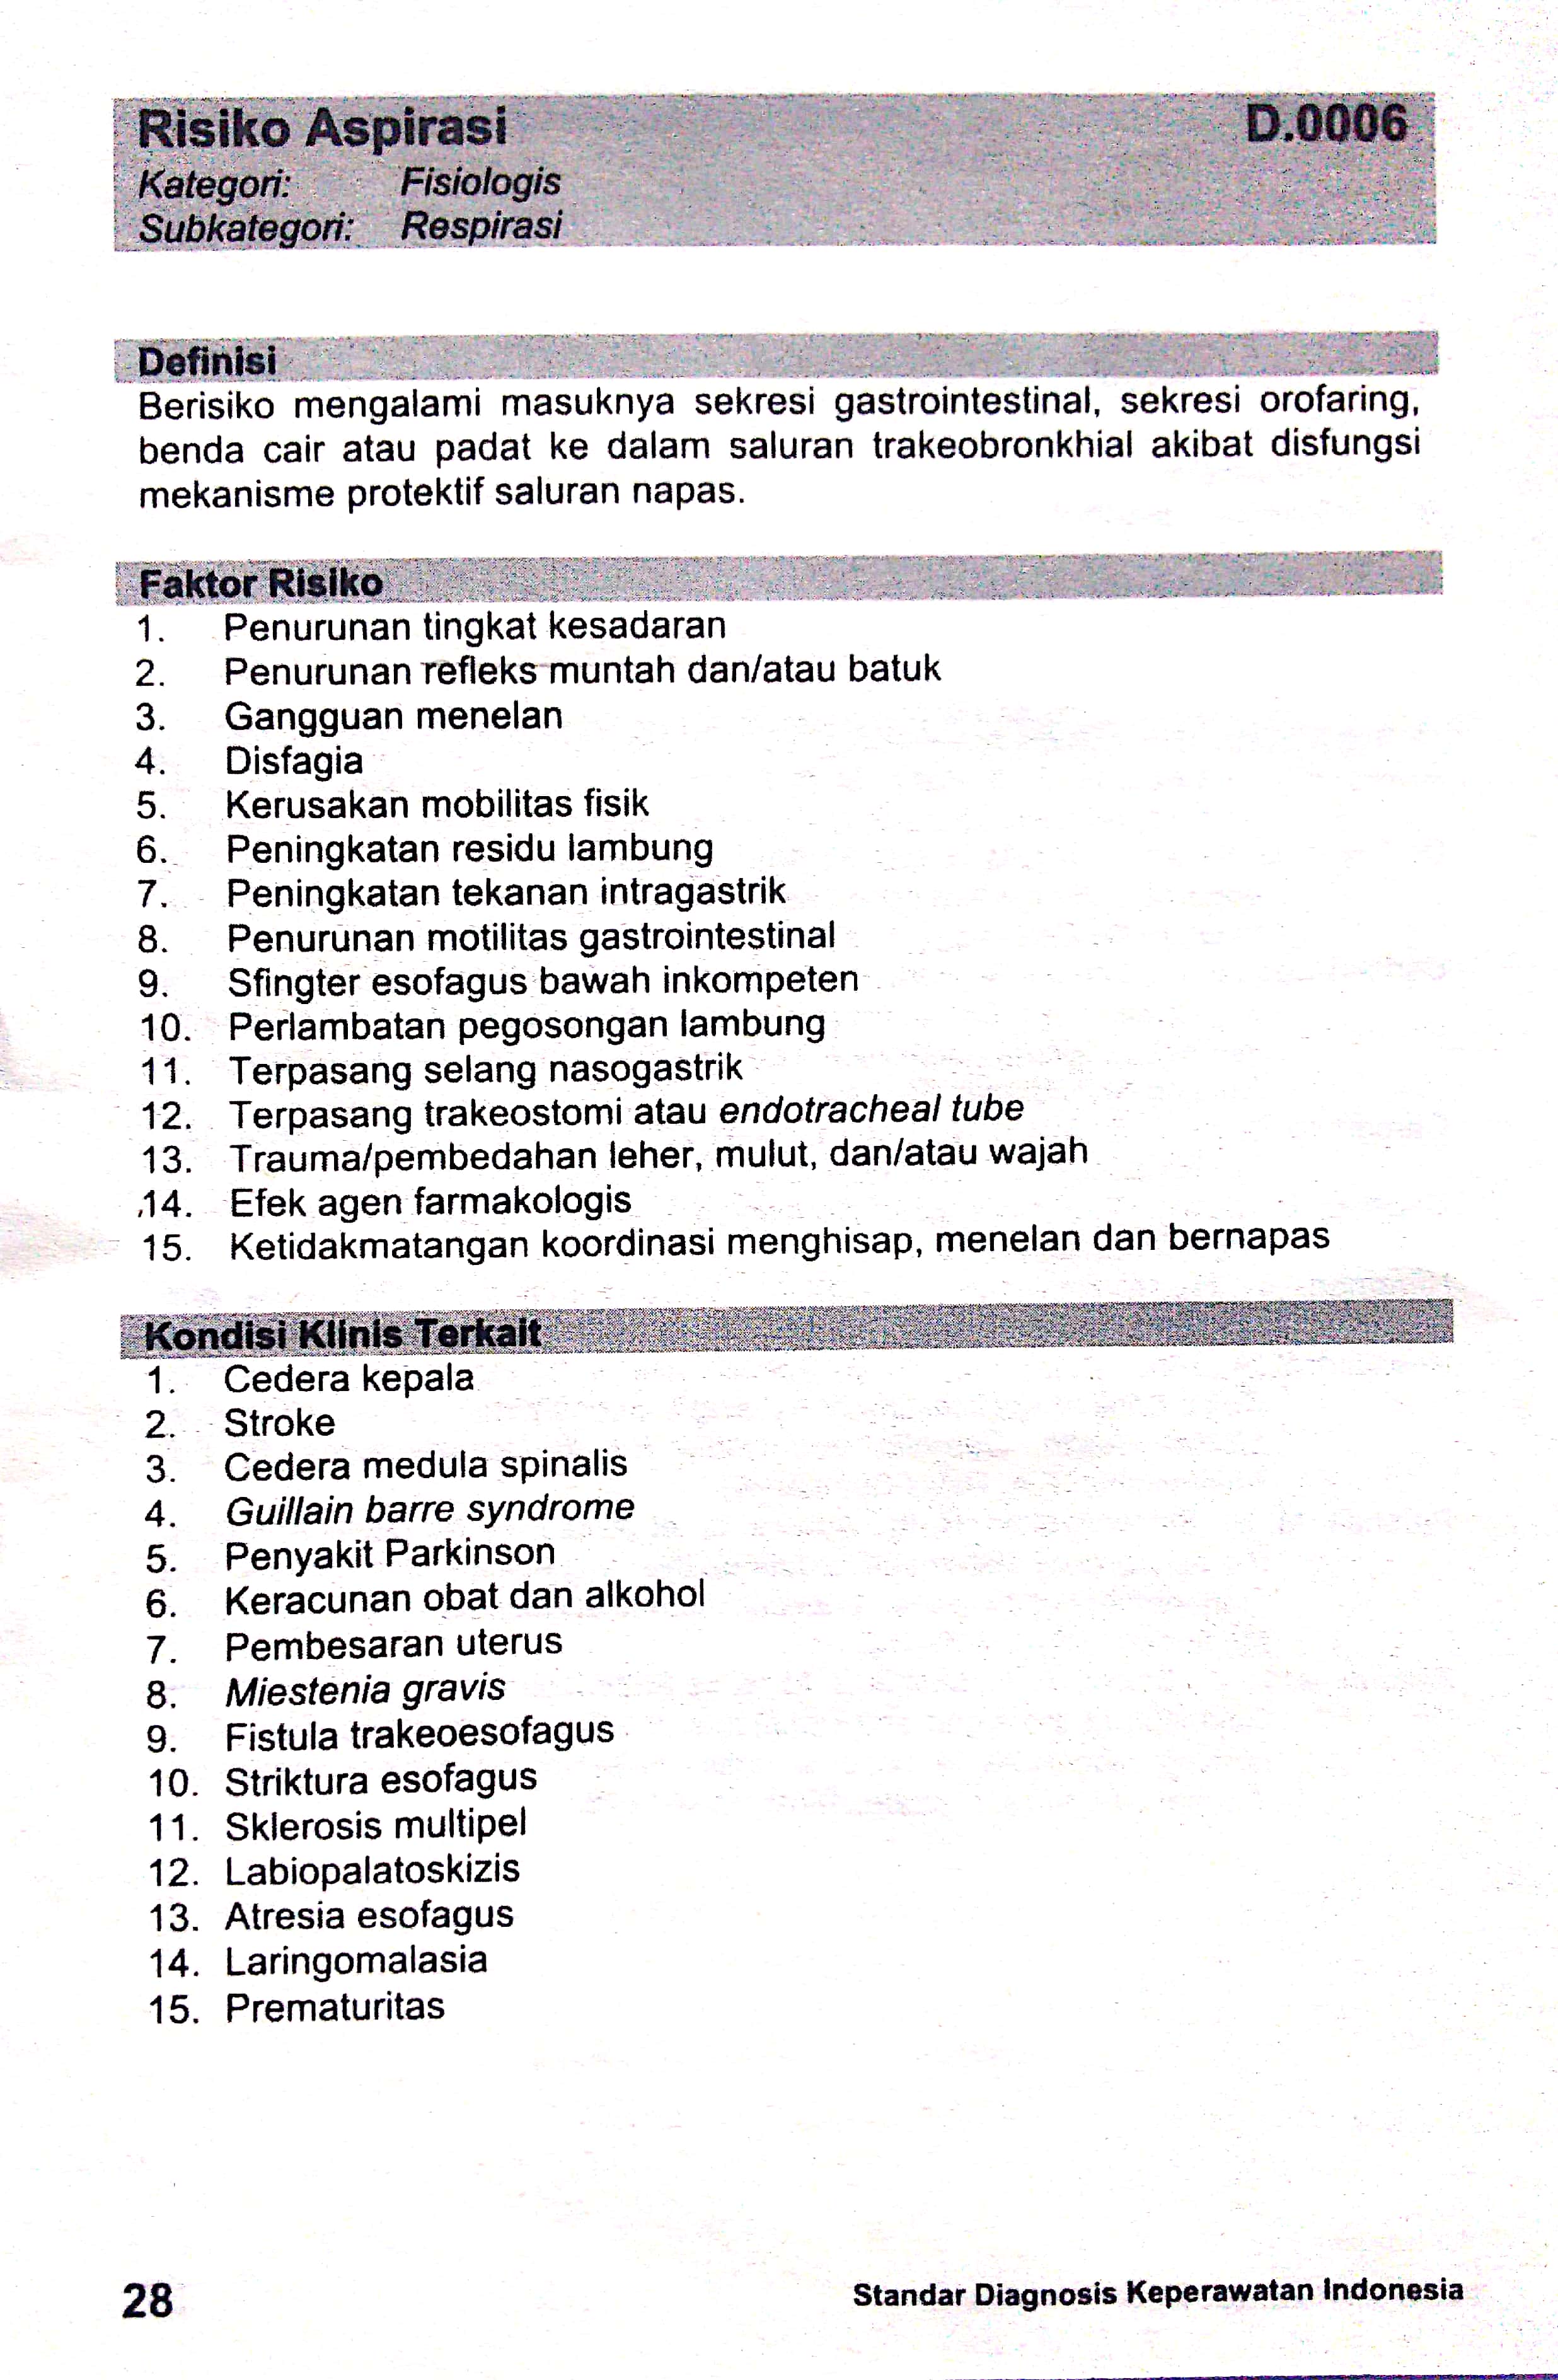 d-0006-risiko-aspirasi-sdki-standart-diagnosis-keperawatan-indonesia